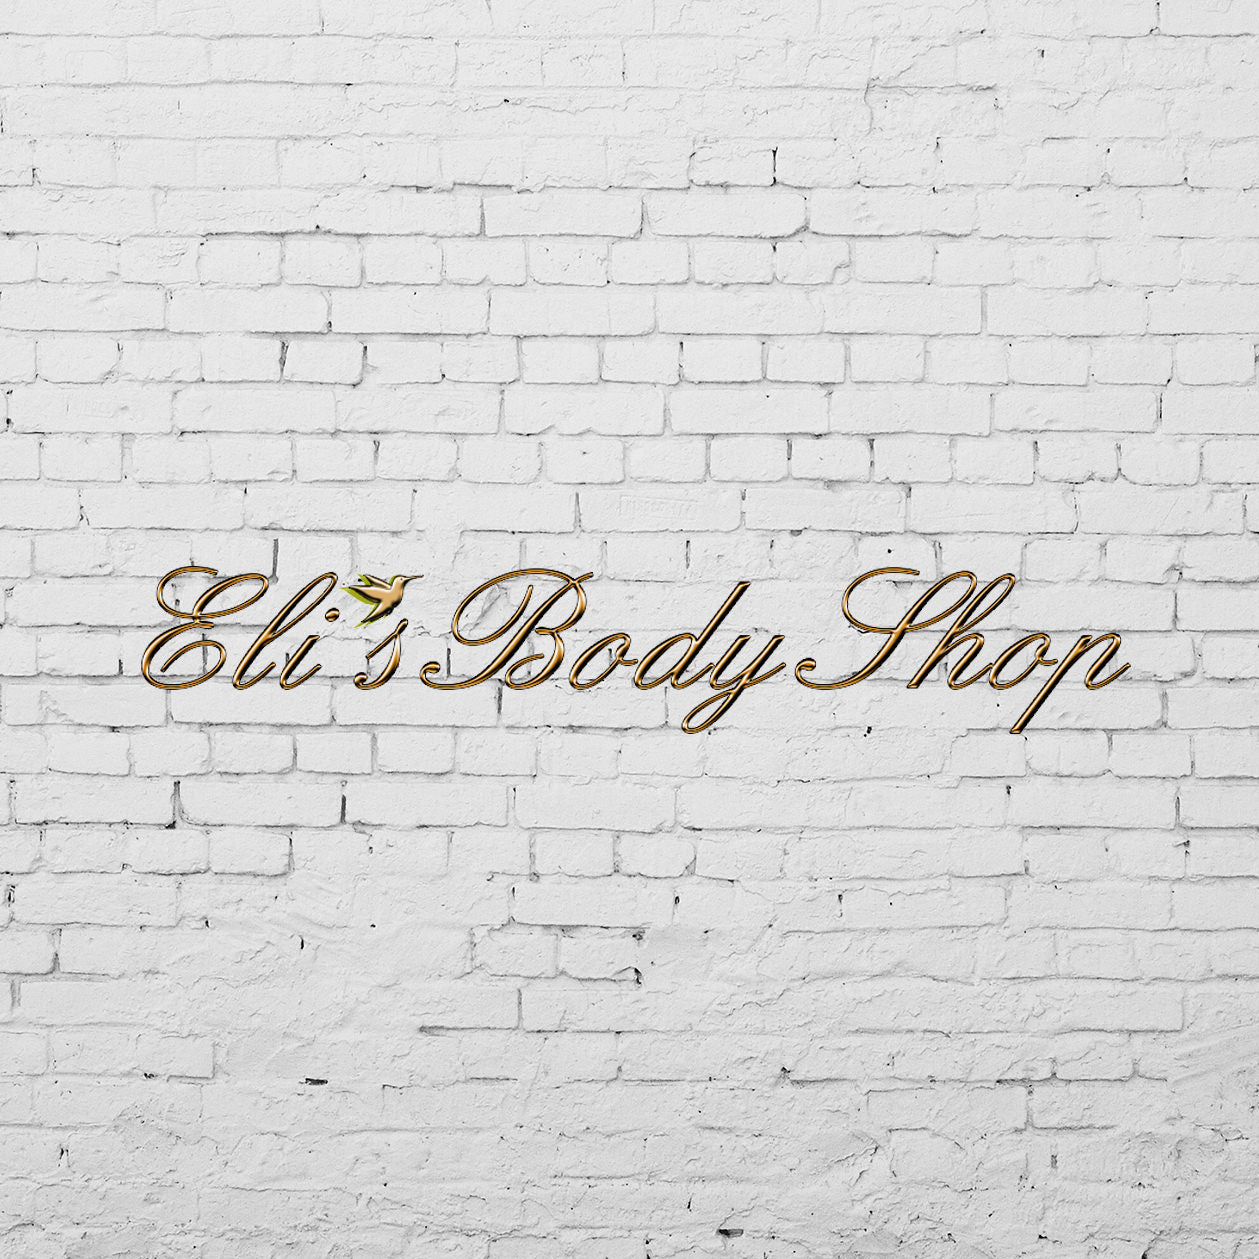 Eli's Body Shop